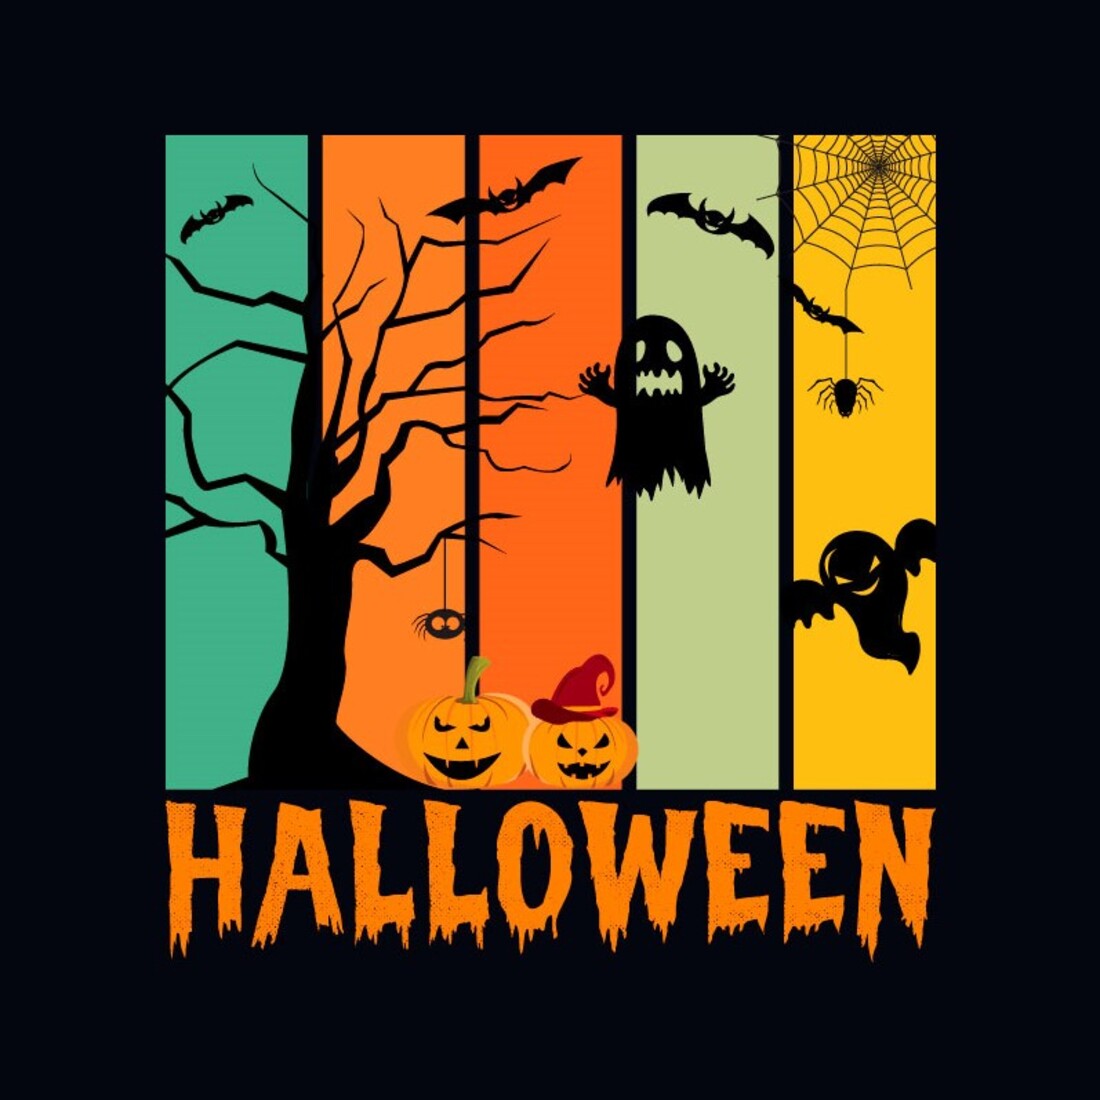 Halloween Color Vintage T-shirt cover image.